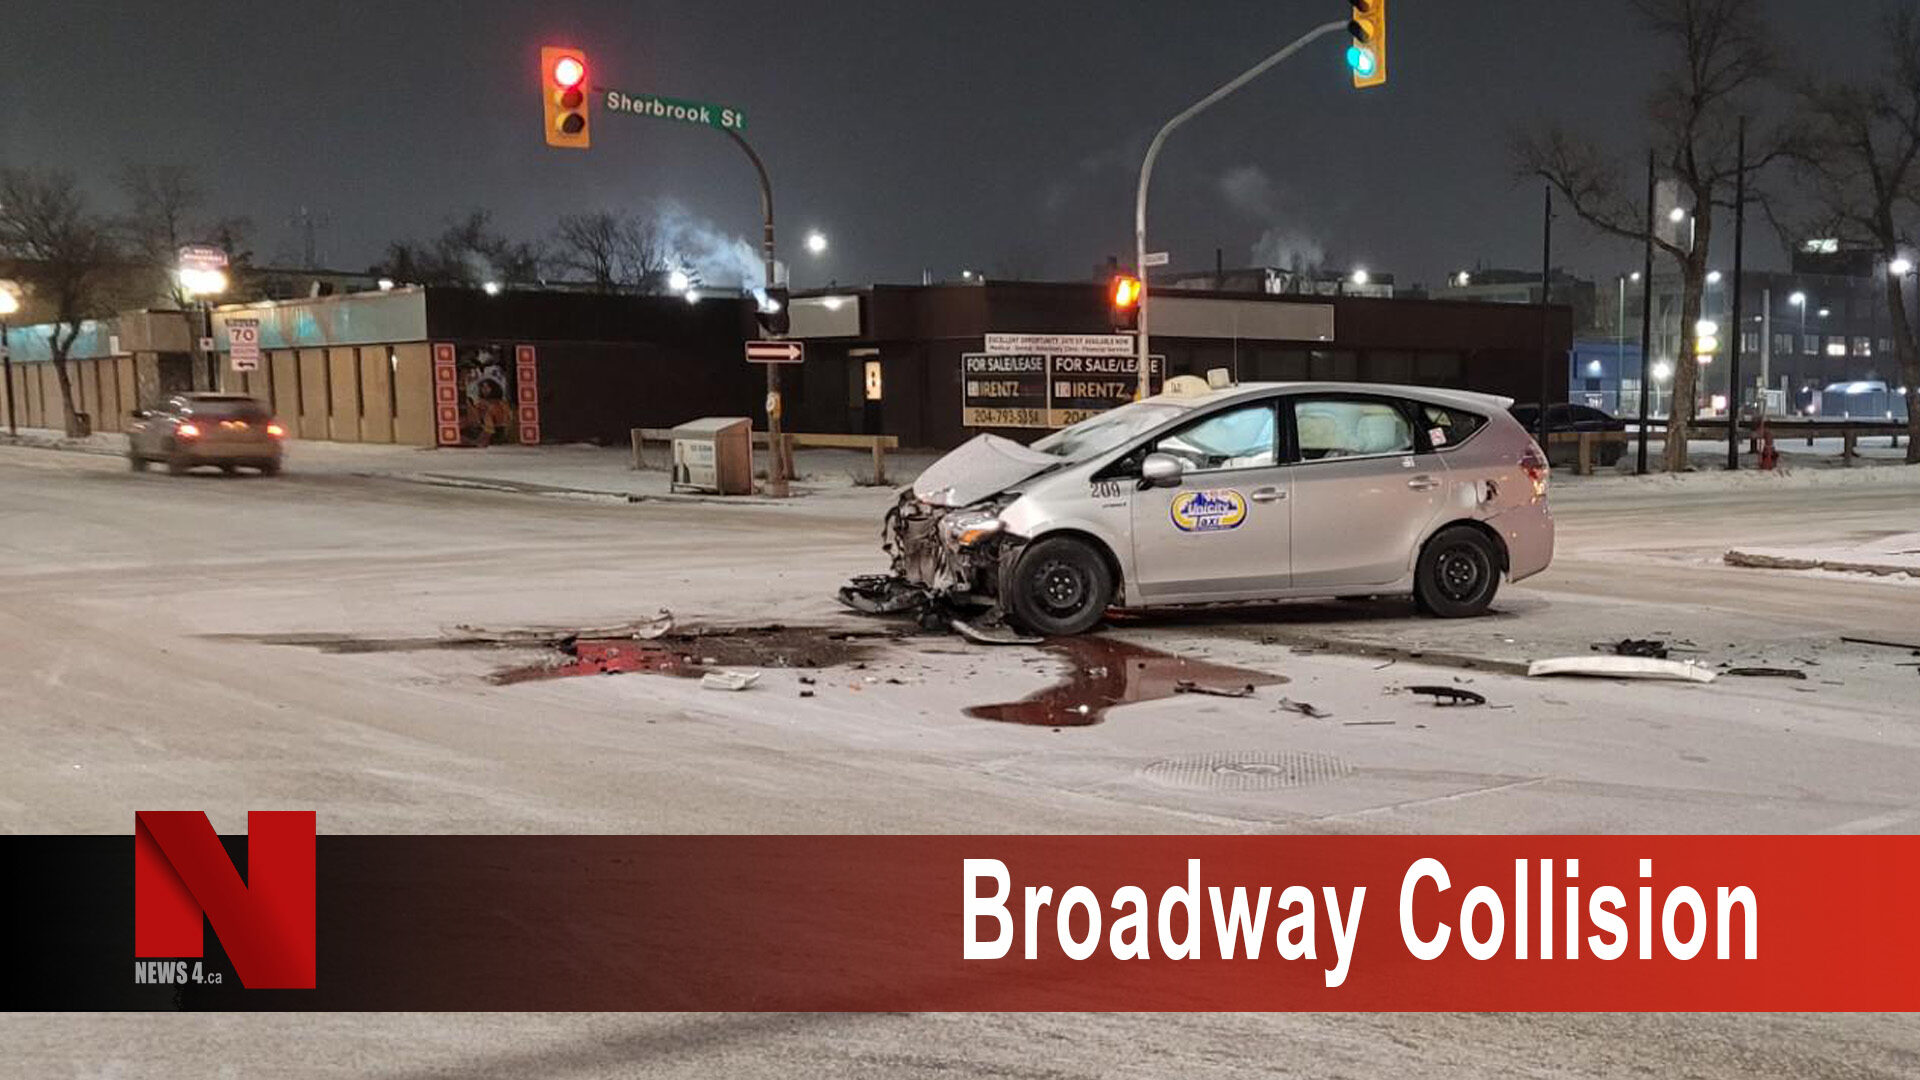 Broadway collision